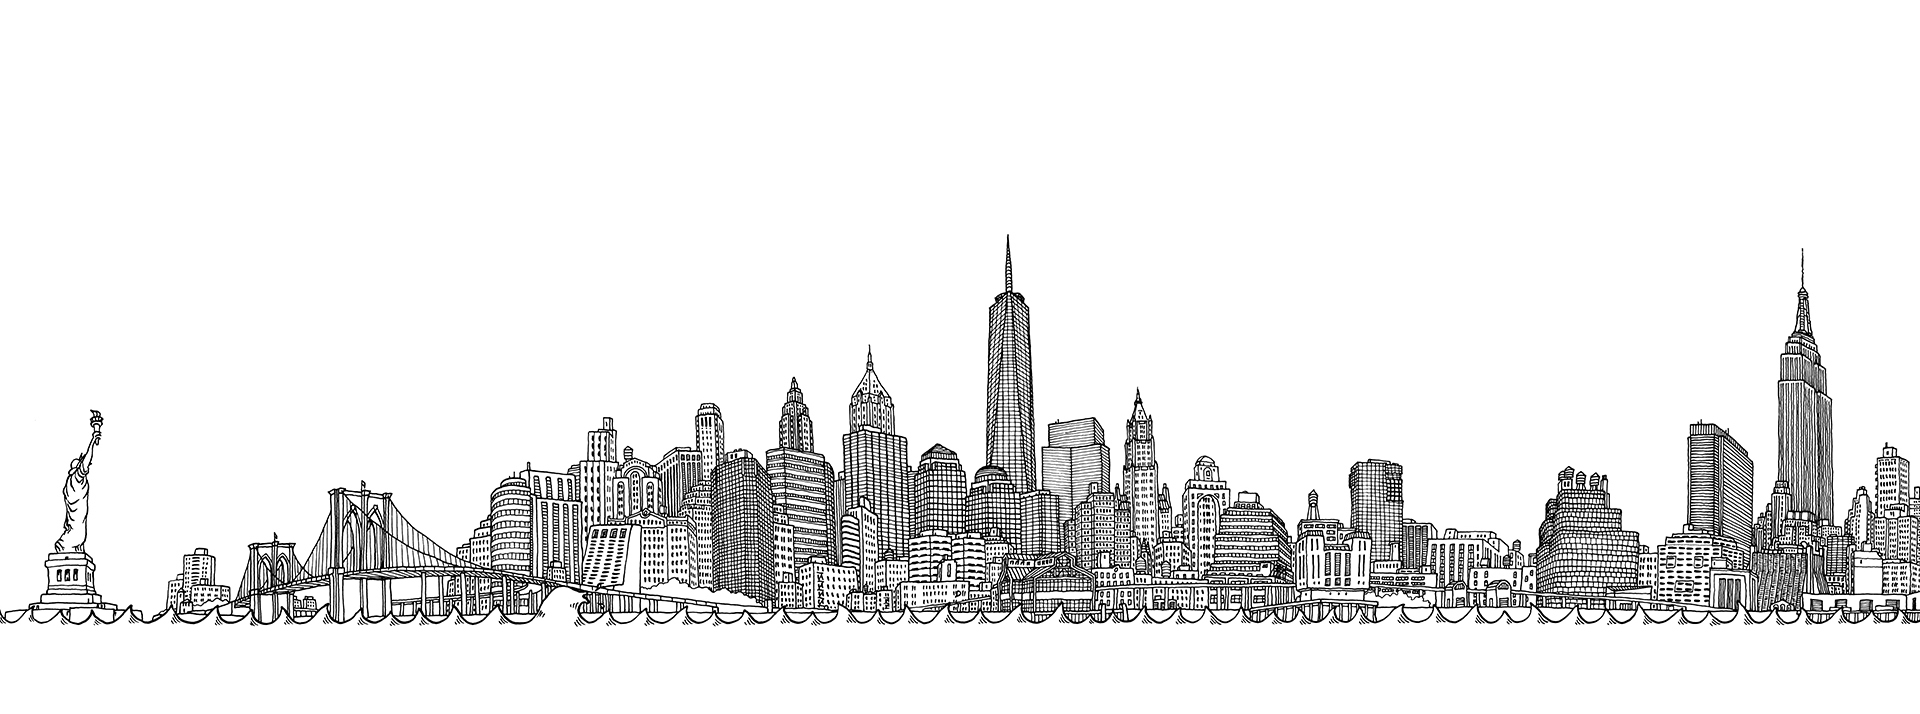 Matteo-Pericoli-Imaginary Skyline Manhattan